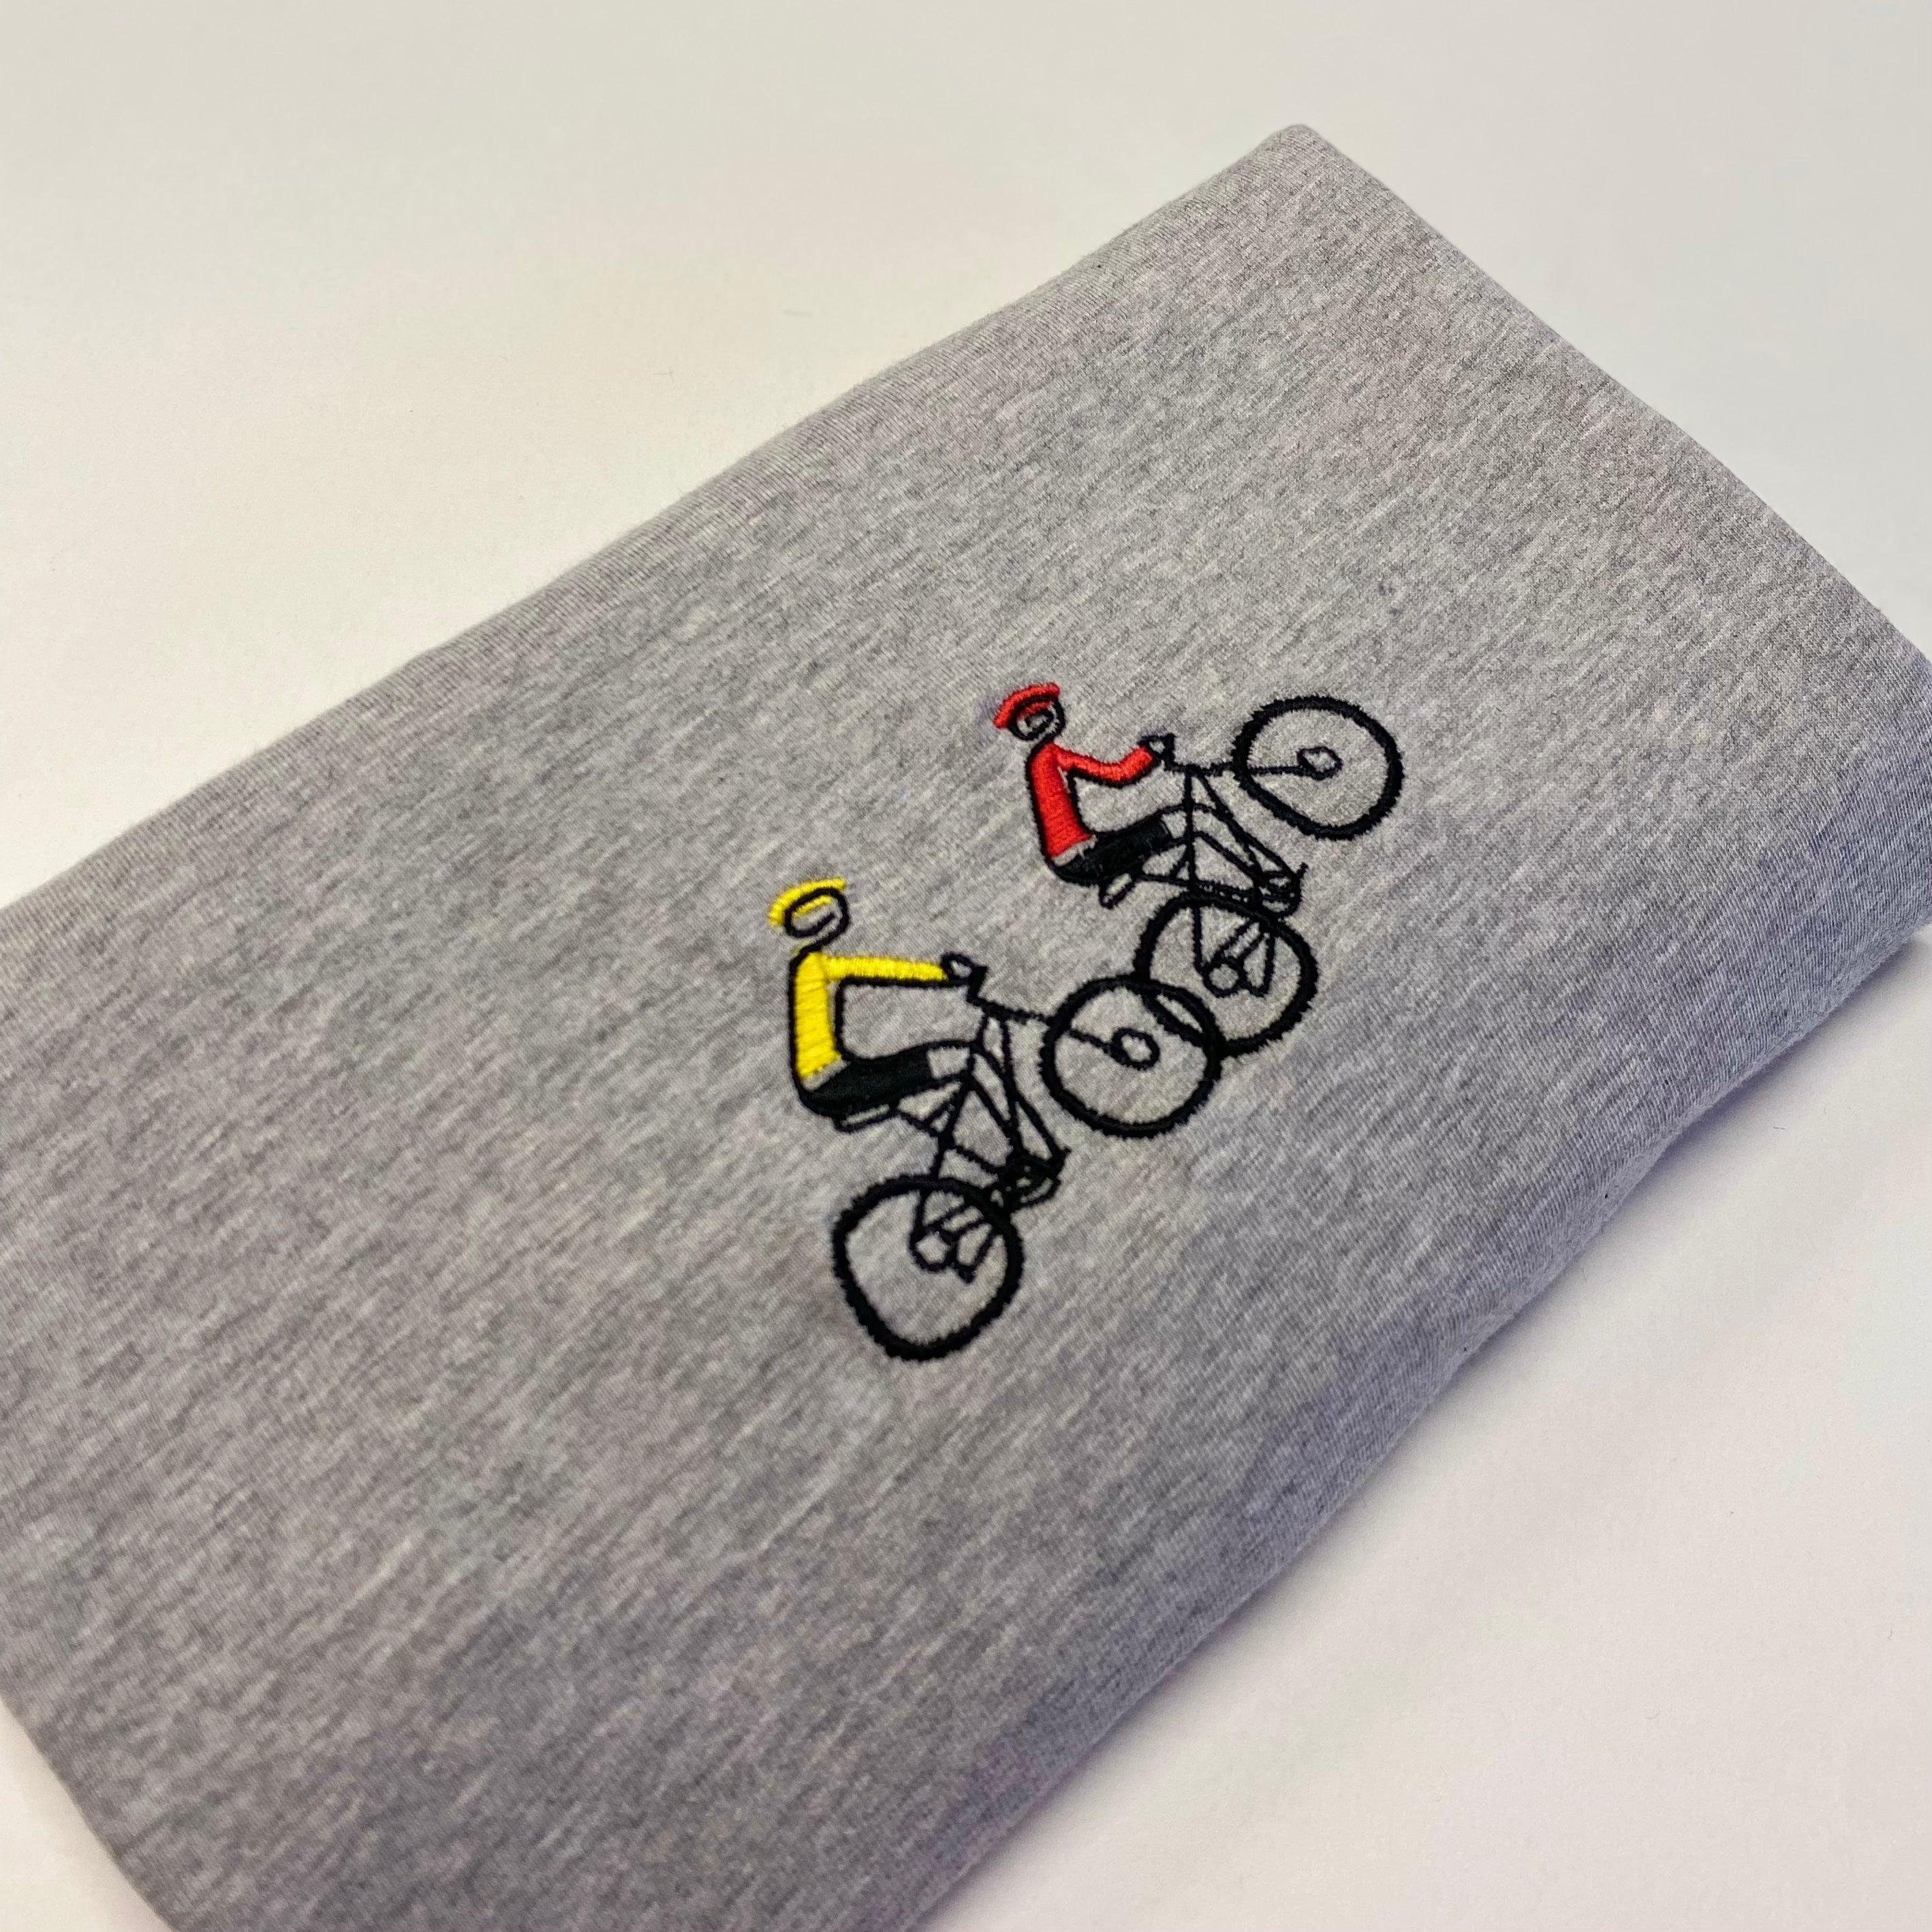 Mountain Bike Tour Embroidered Sweatshirt - Spoke & Solace